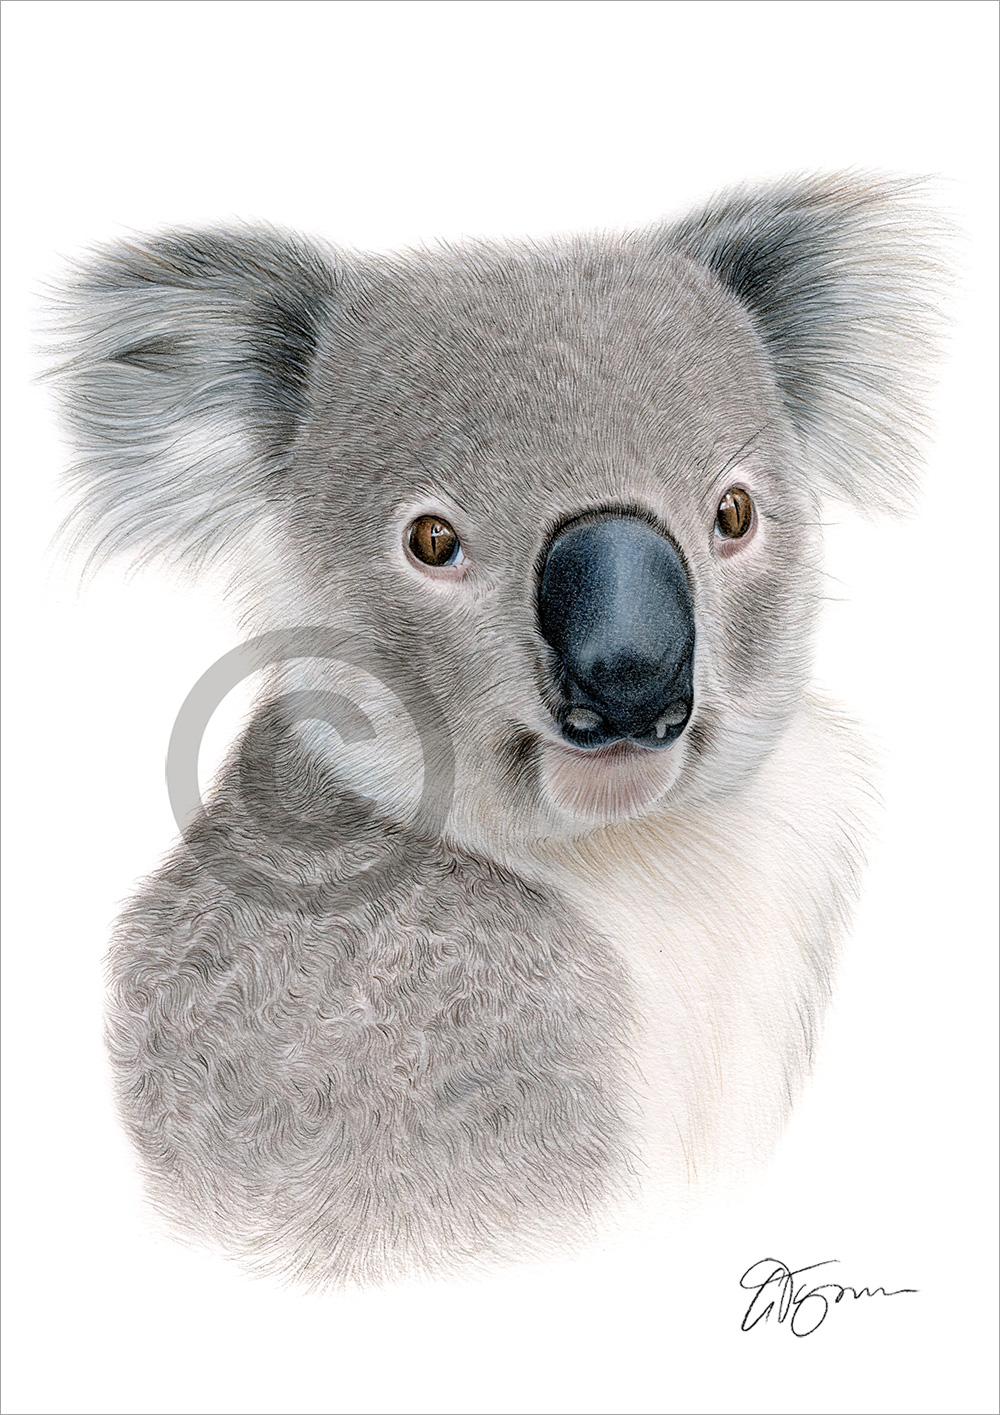 Colour pencil drawing of a Koala by artist Gary Tymon